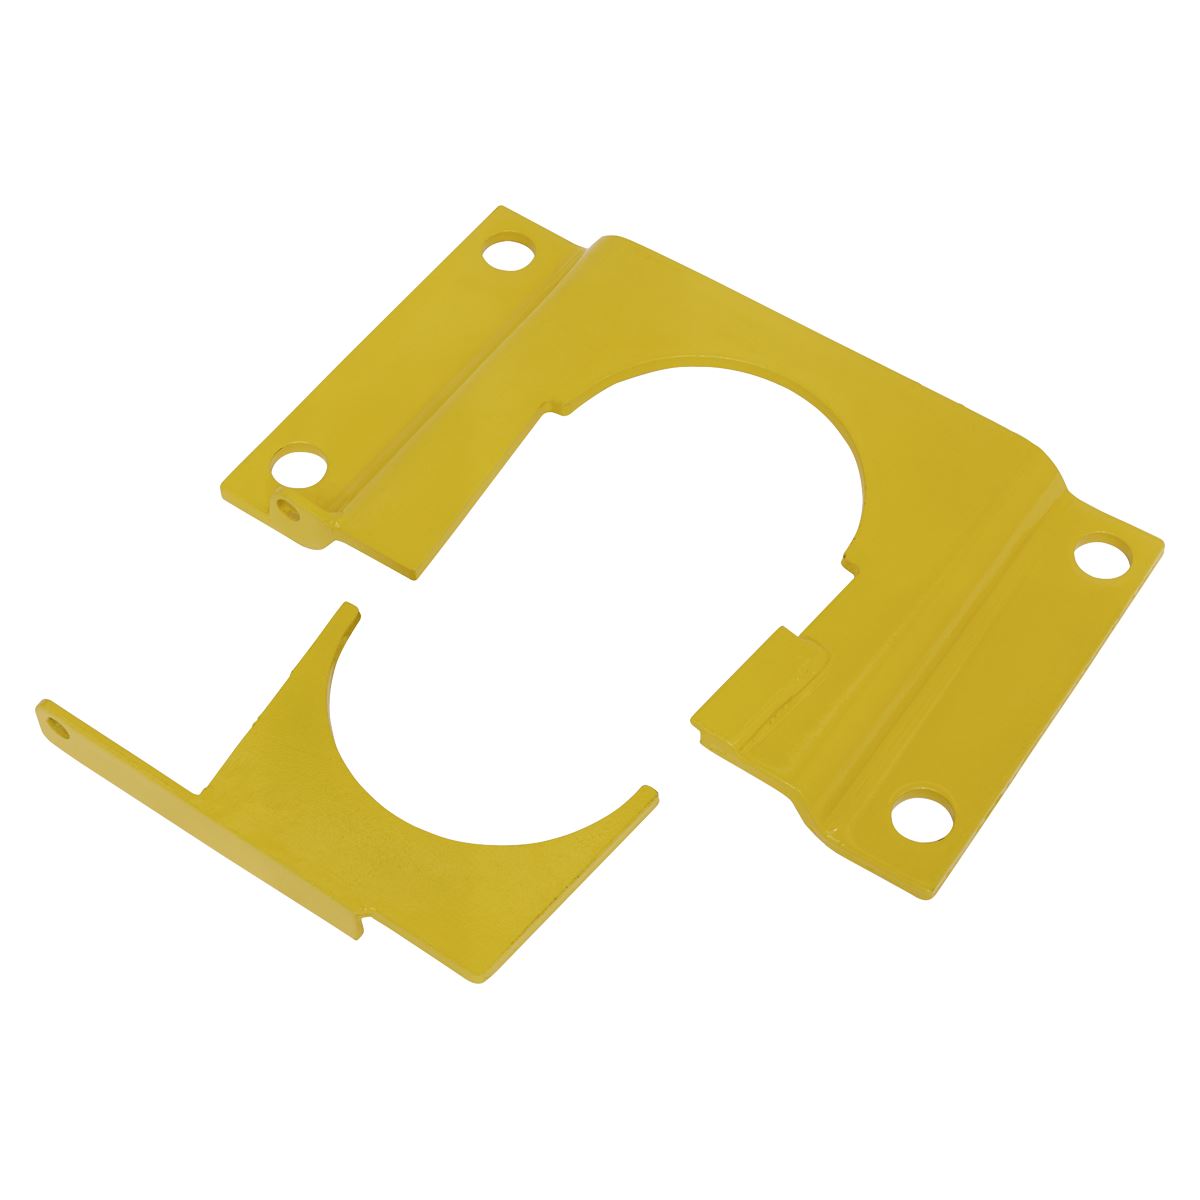 Sealey Removable Bollard Base Plate - Locking